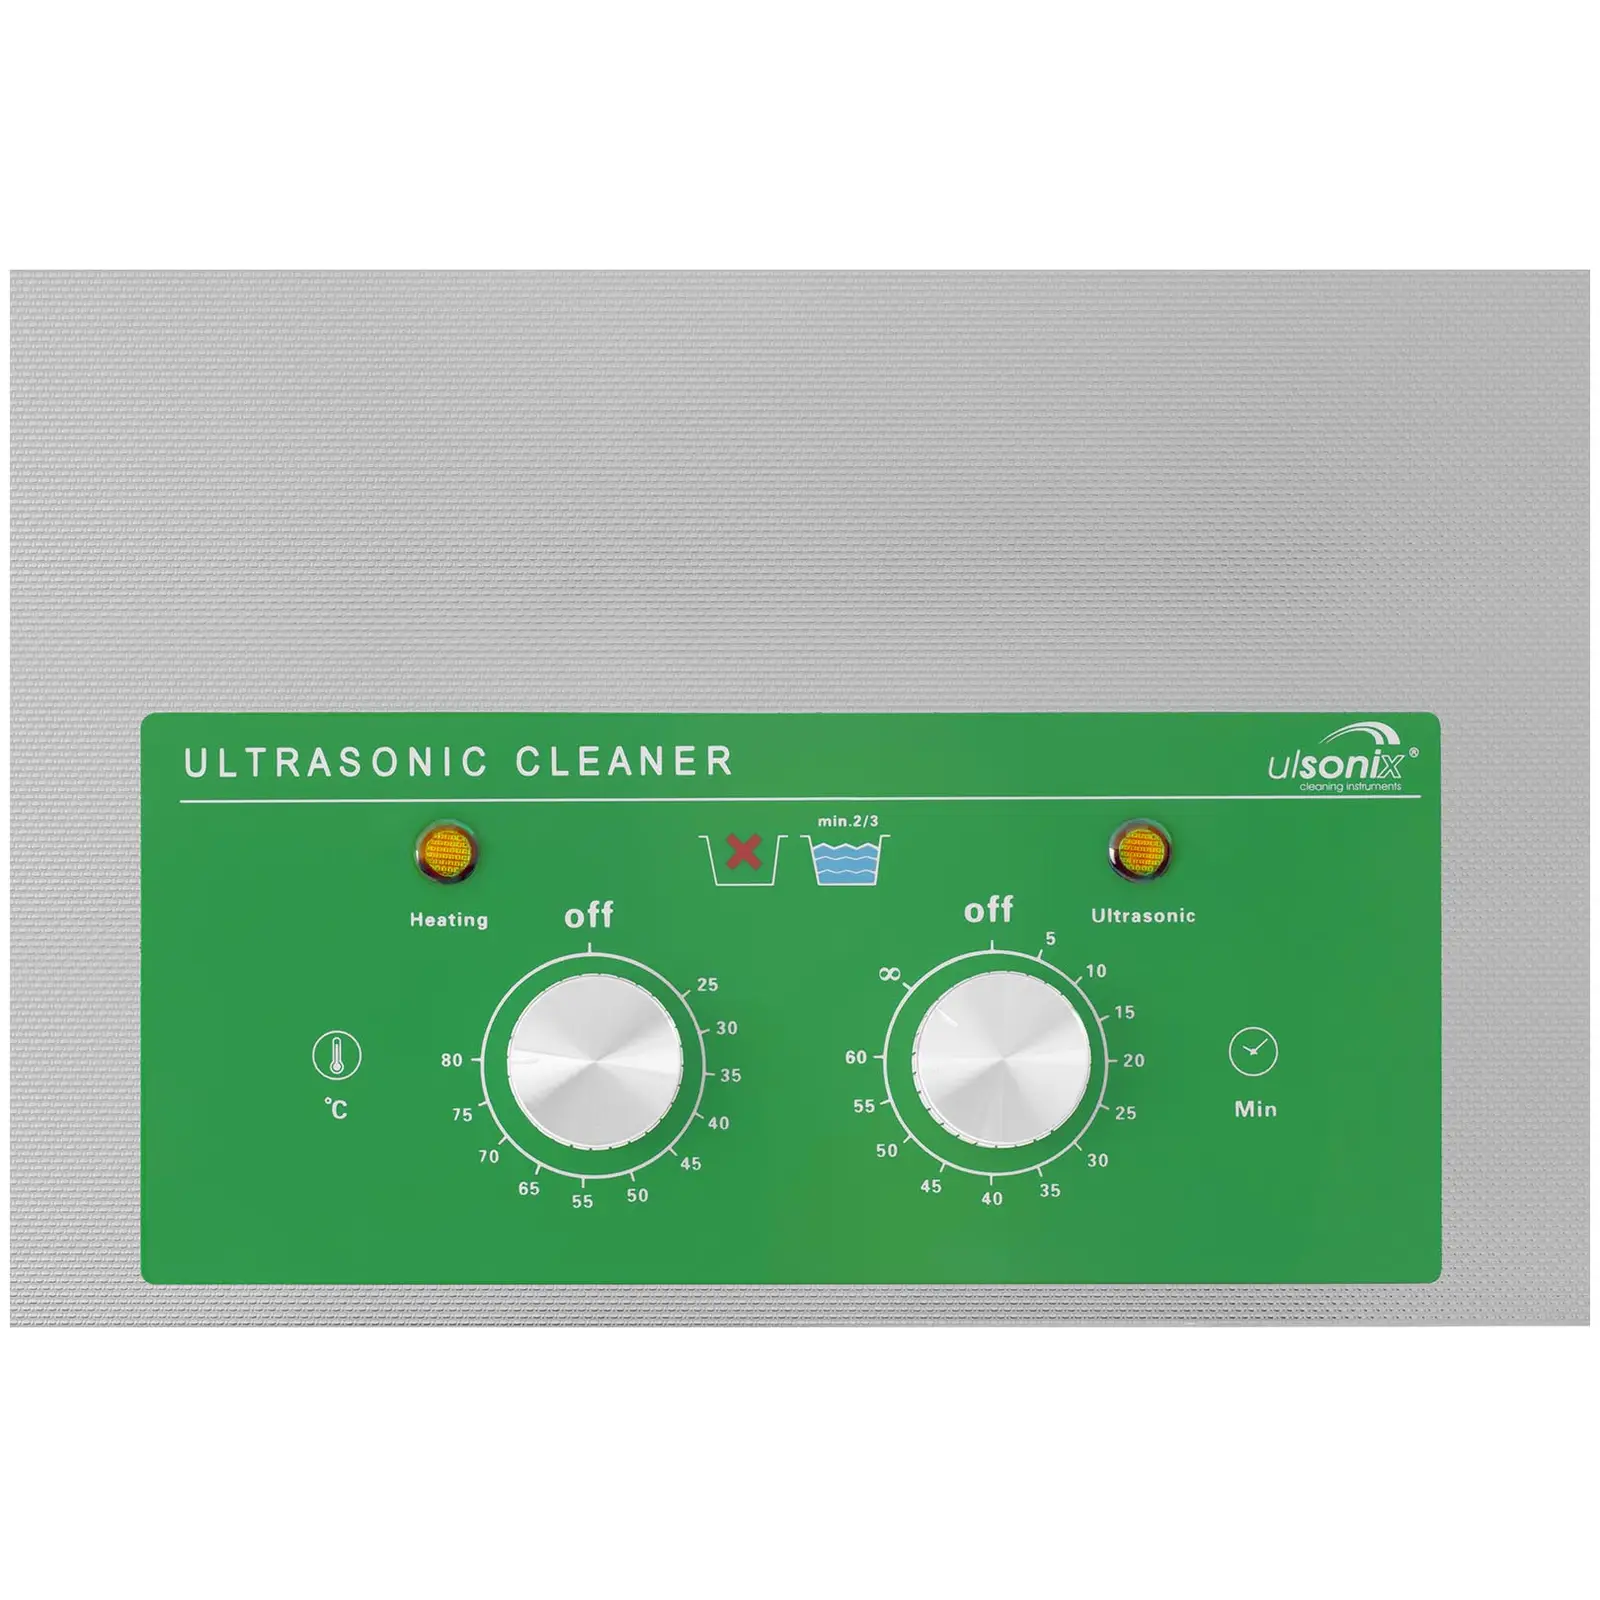 Ultrasonic cleaner - 28 litres - 480 W - Basic Eco